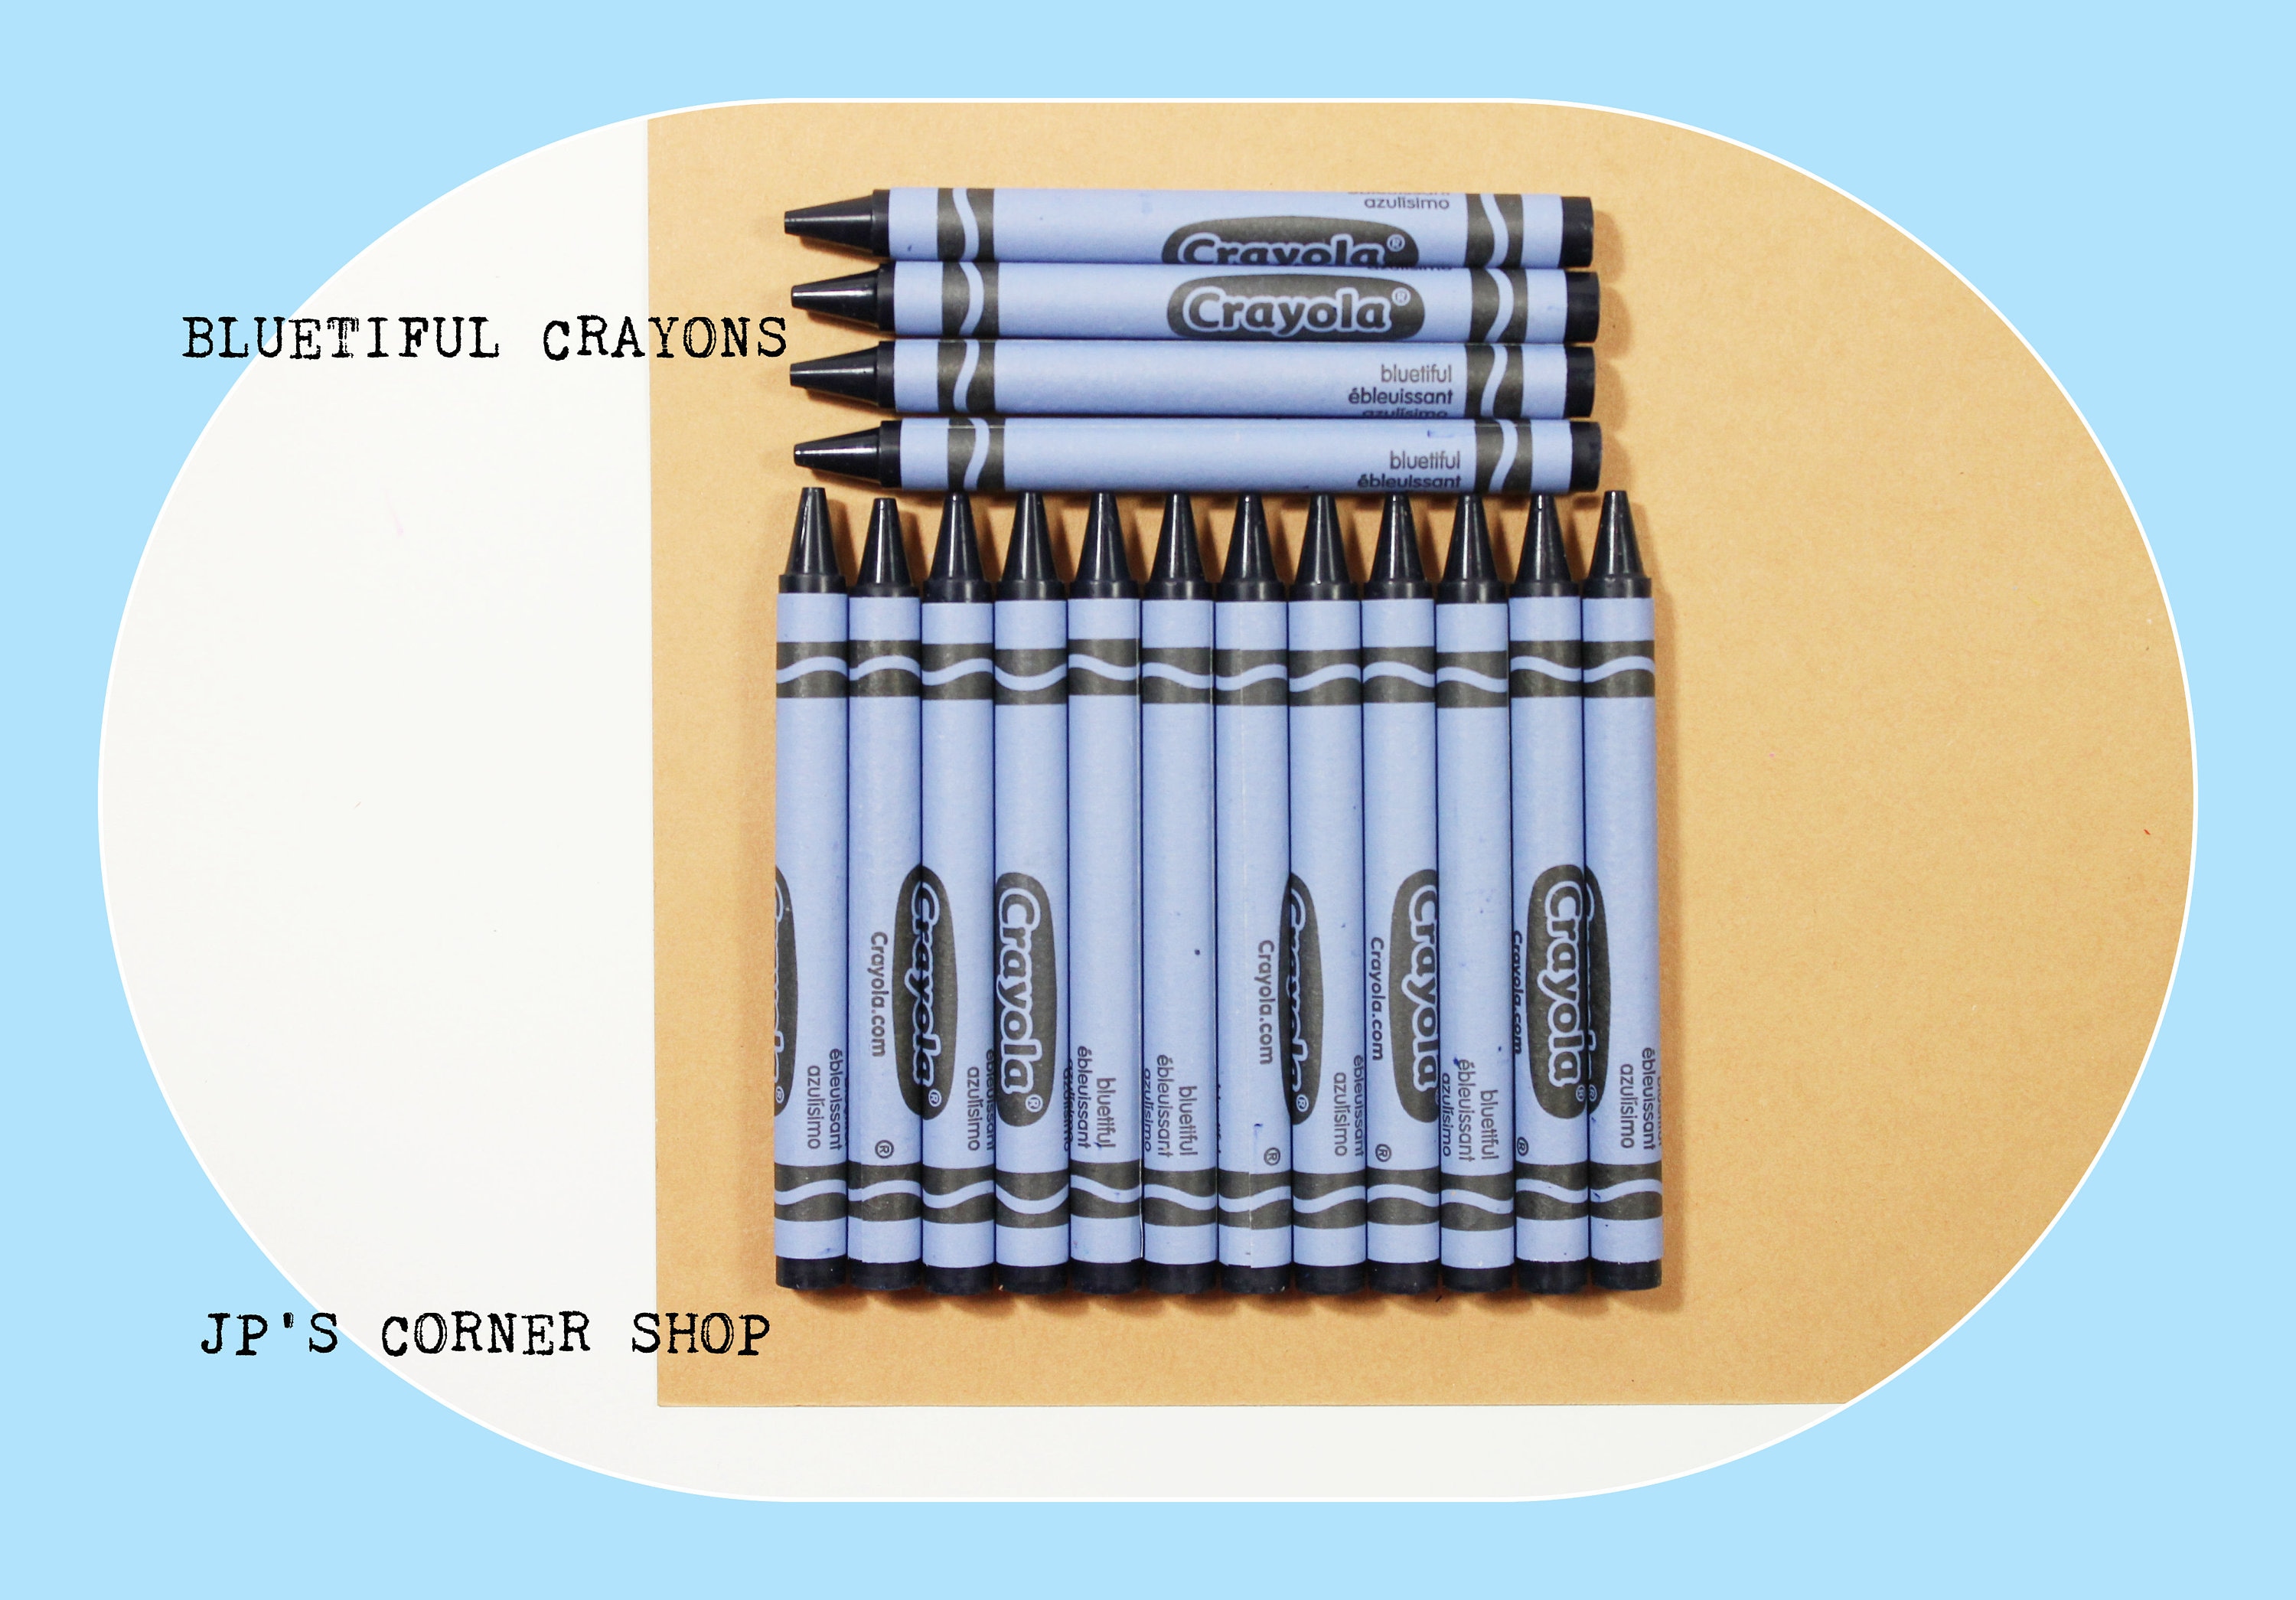 Black Crayons 45 Crayons Crayola Crayons Bulk Crayons Refill Classroom  Coloring Crayon 